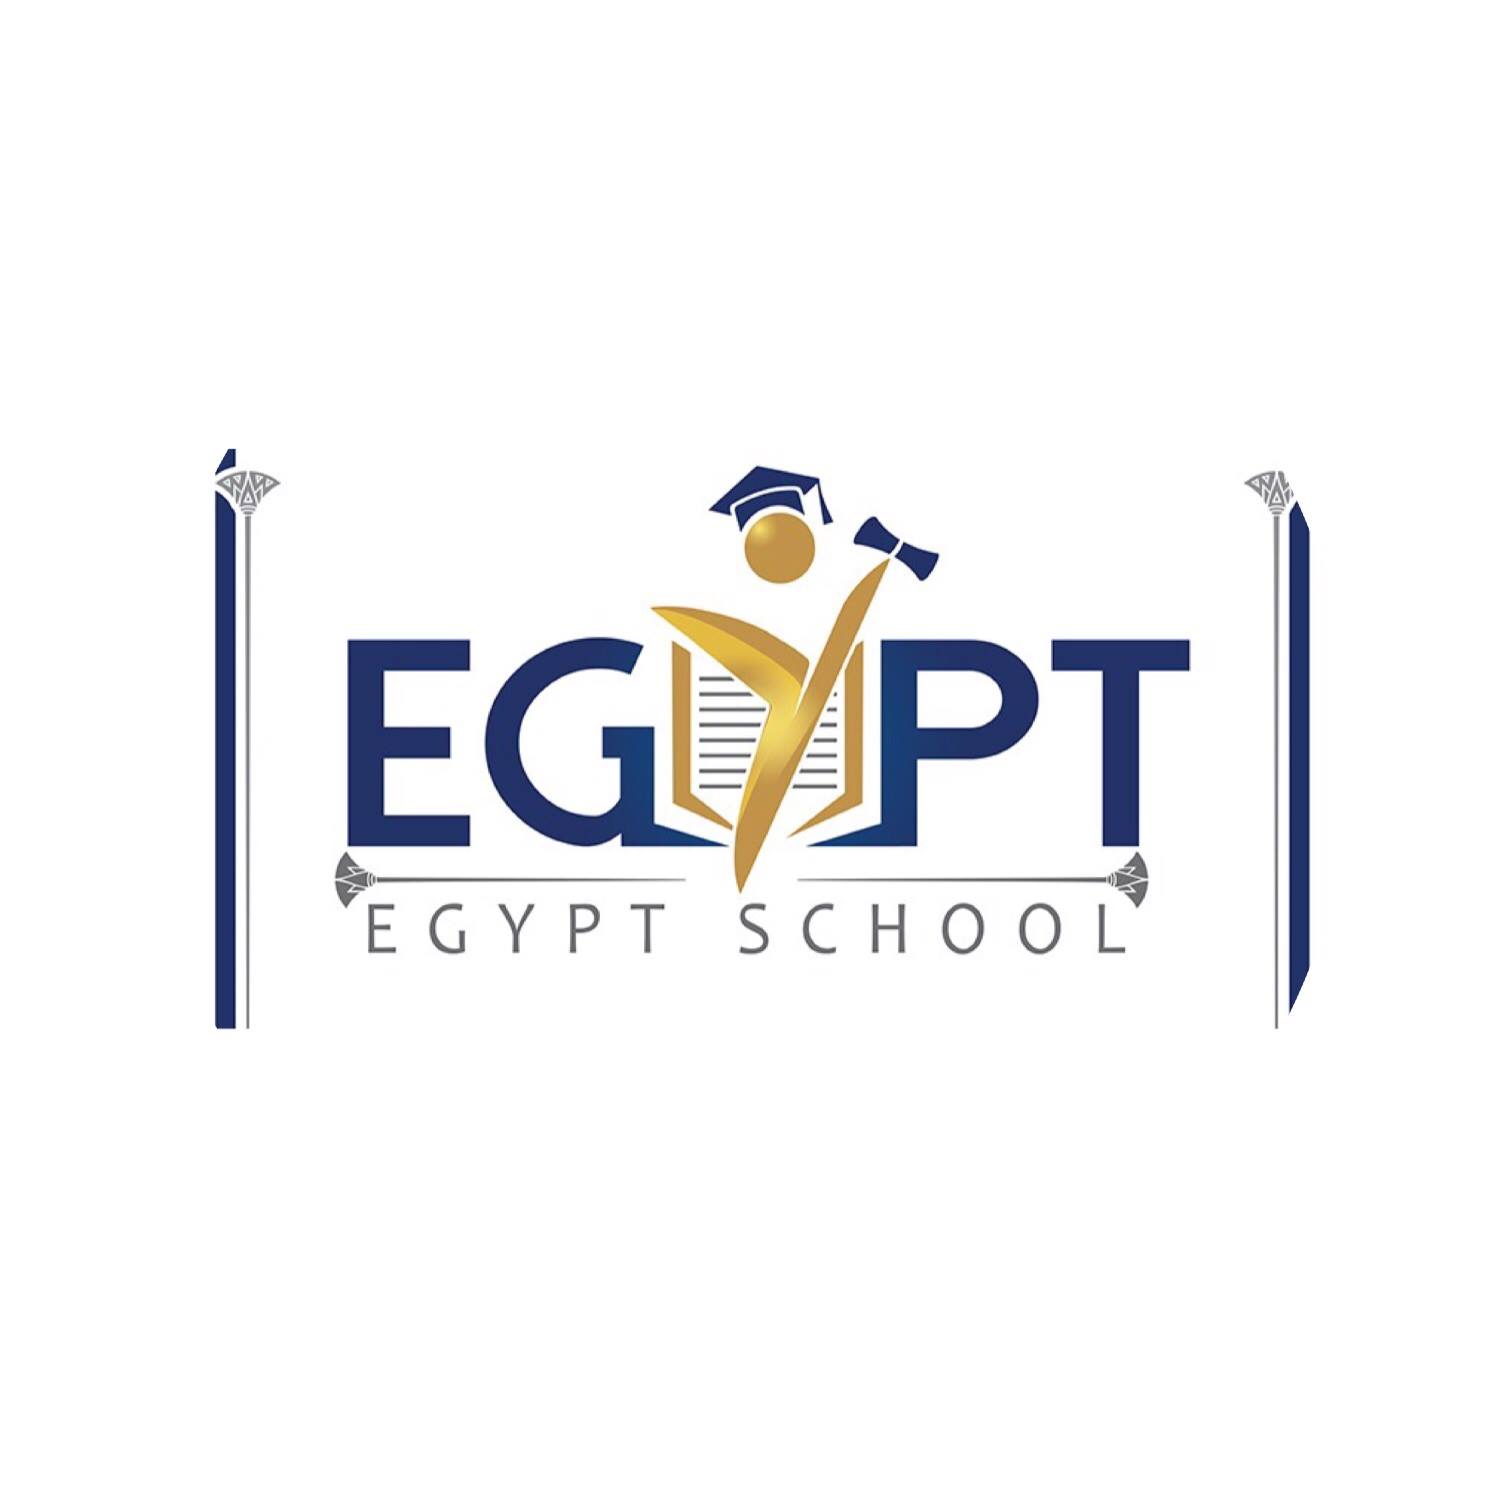 Egypt School